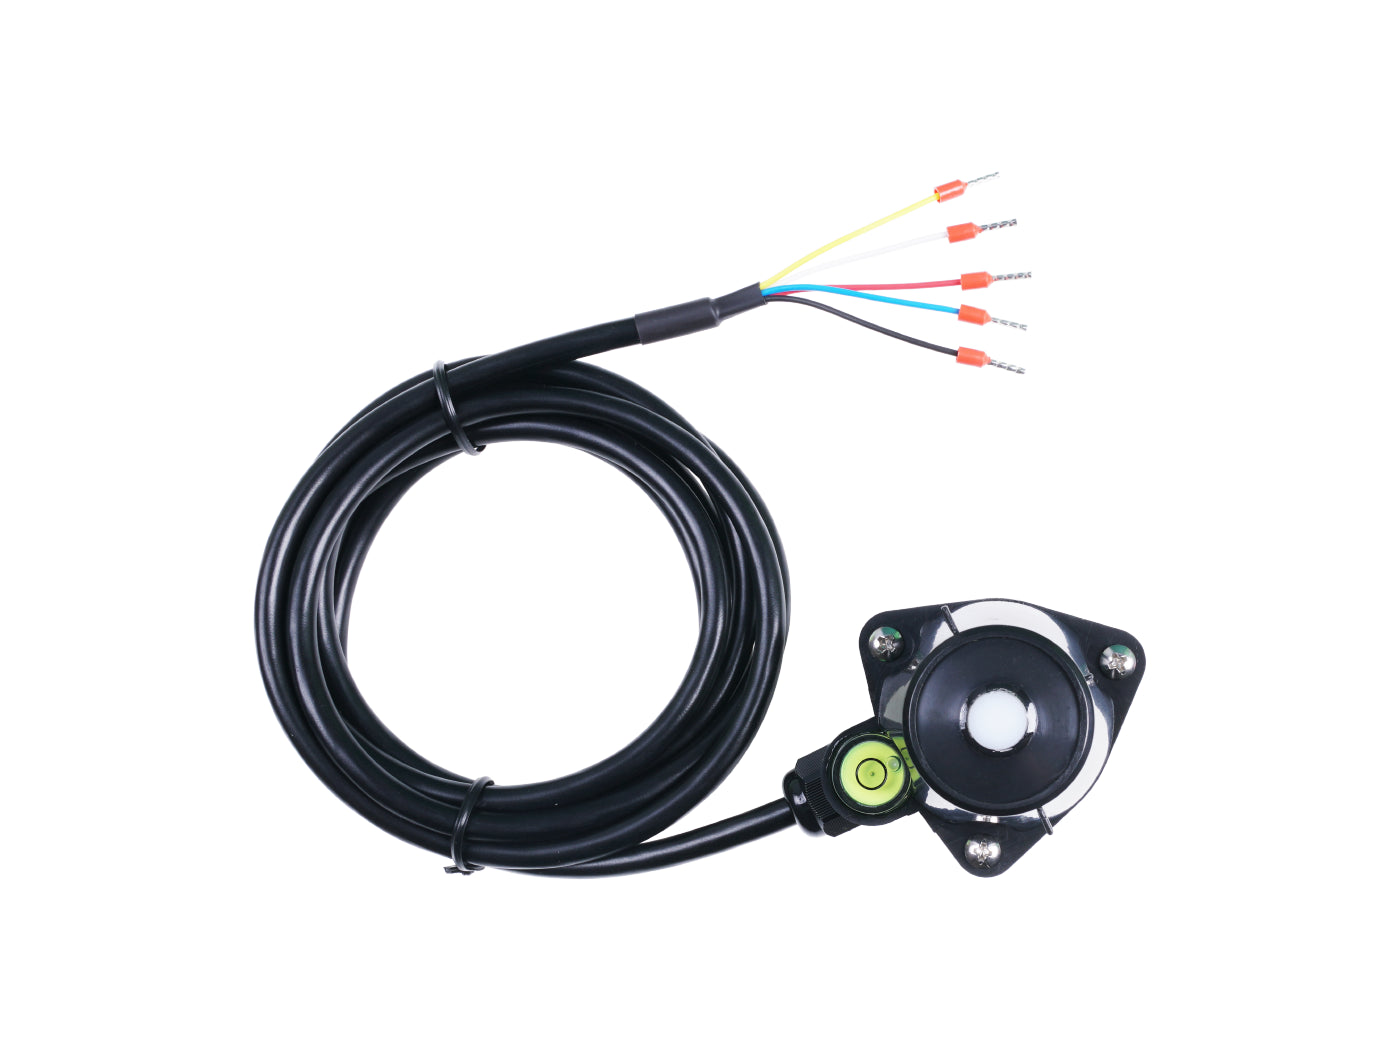 SC228 MODBUS-RTU Light Intensity Sensor - eucatech Store